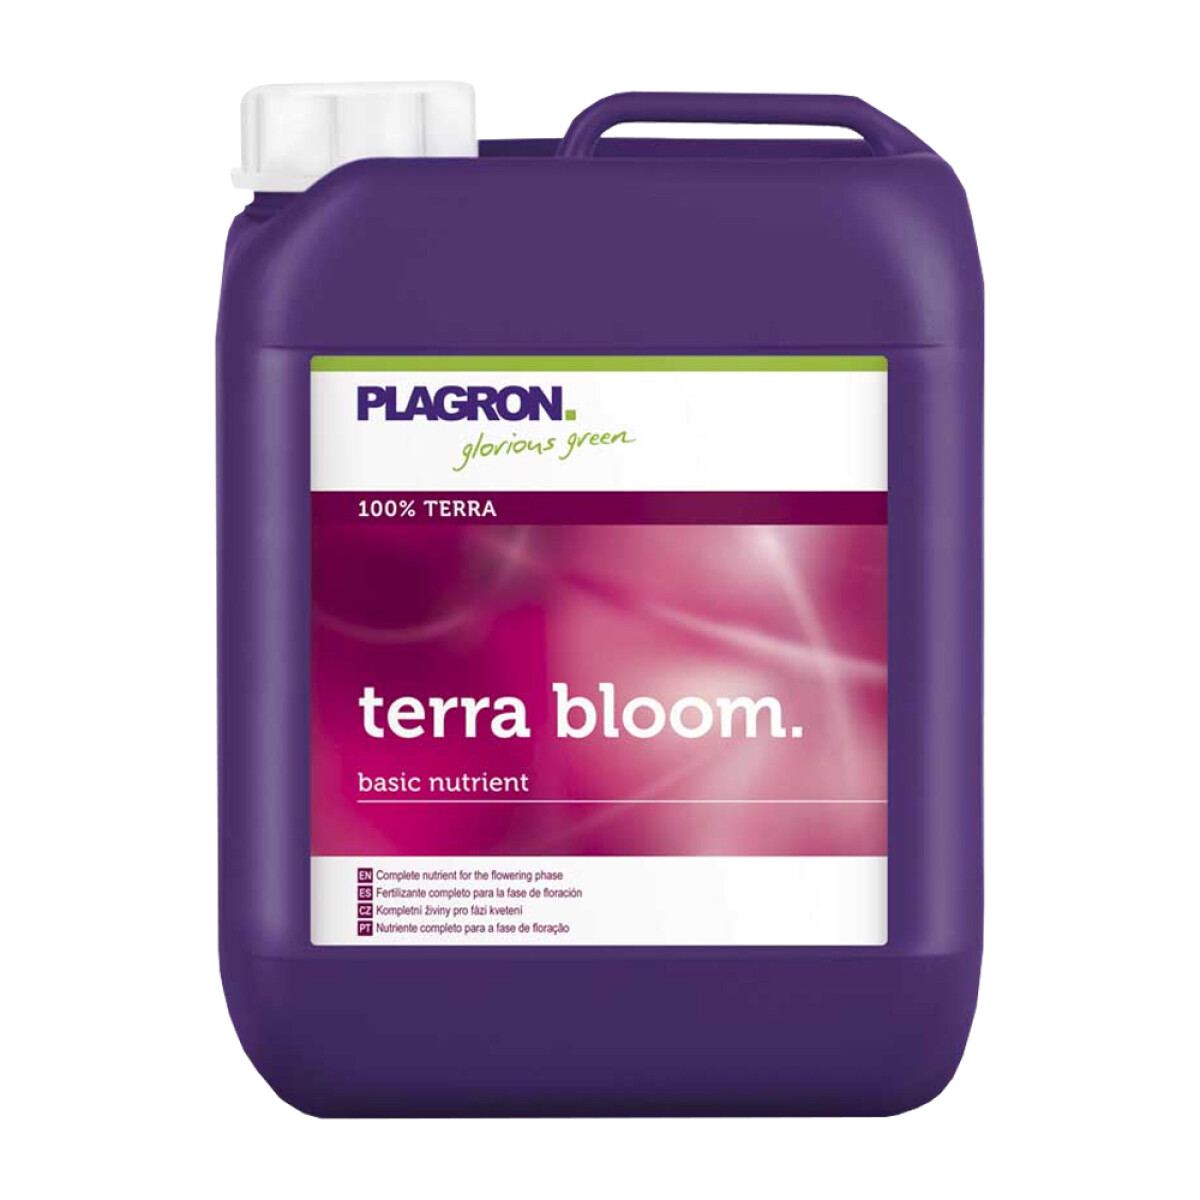 TERRA BLOOM PLAGRON - 5L 